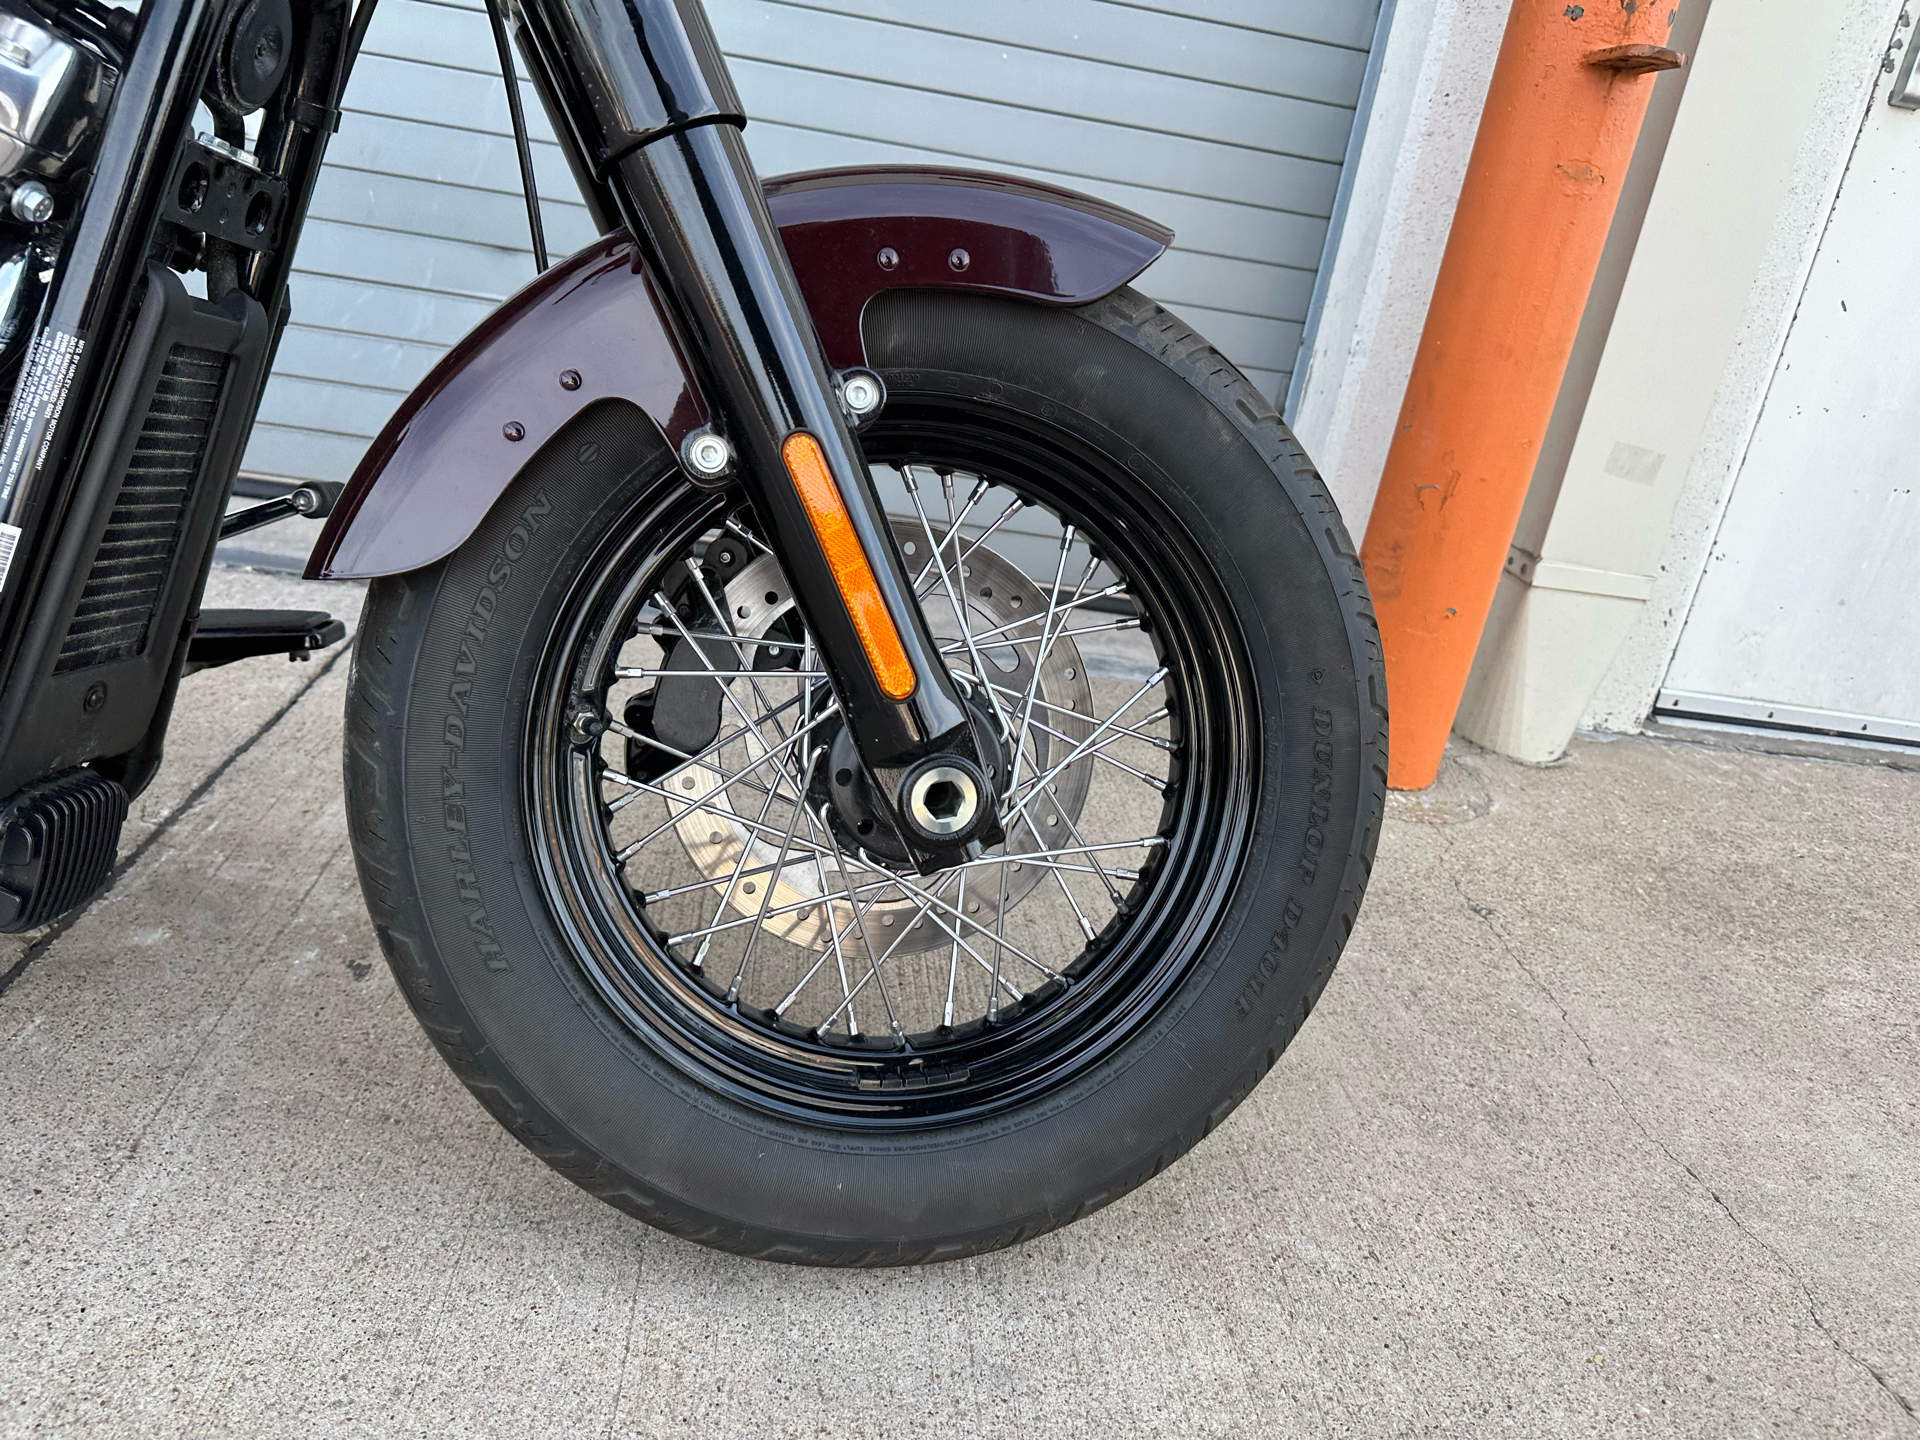 2021 Harley-Davidson Softail Slim® in Grand Prairie, Texas - Photo 3